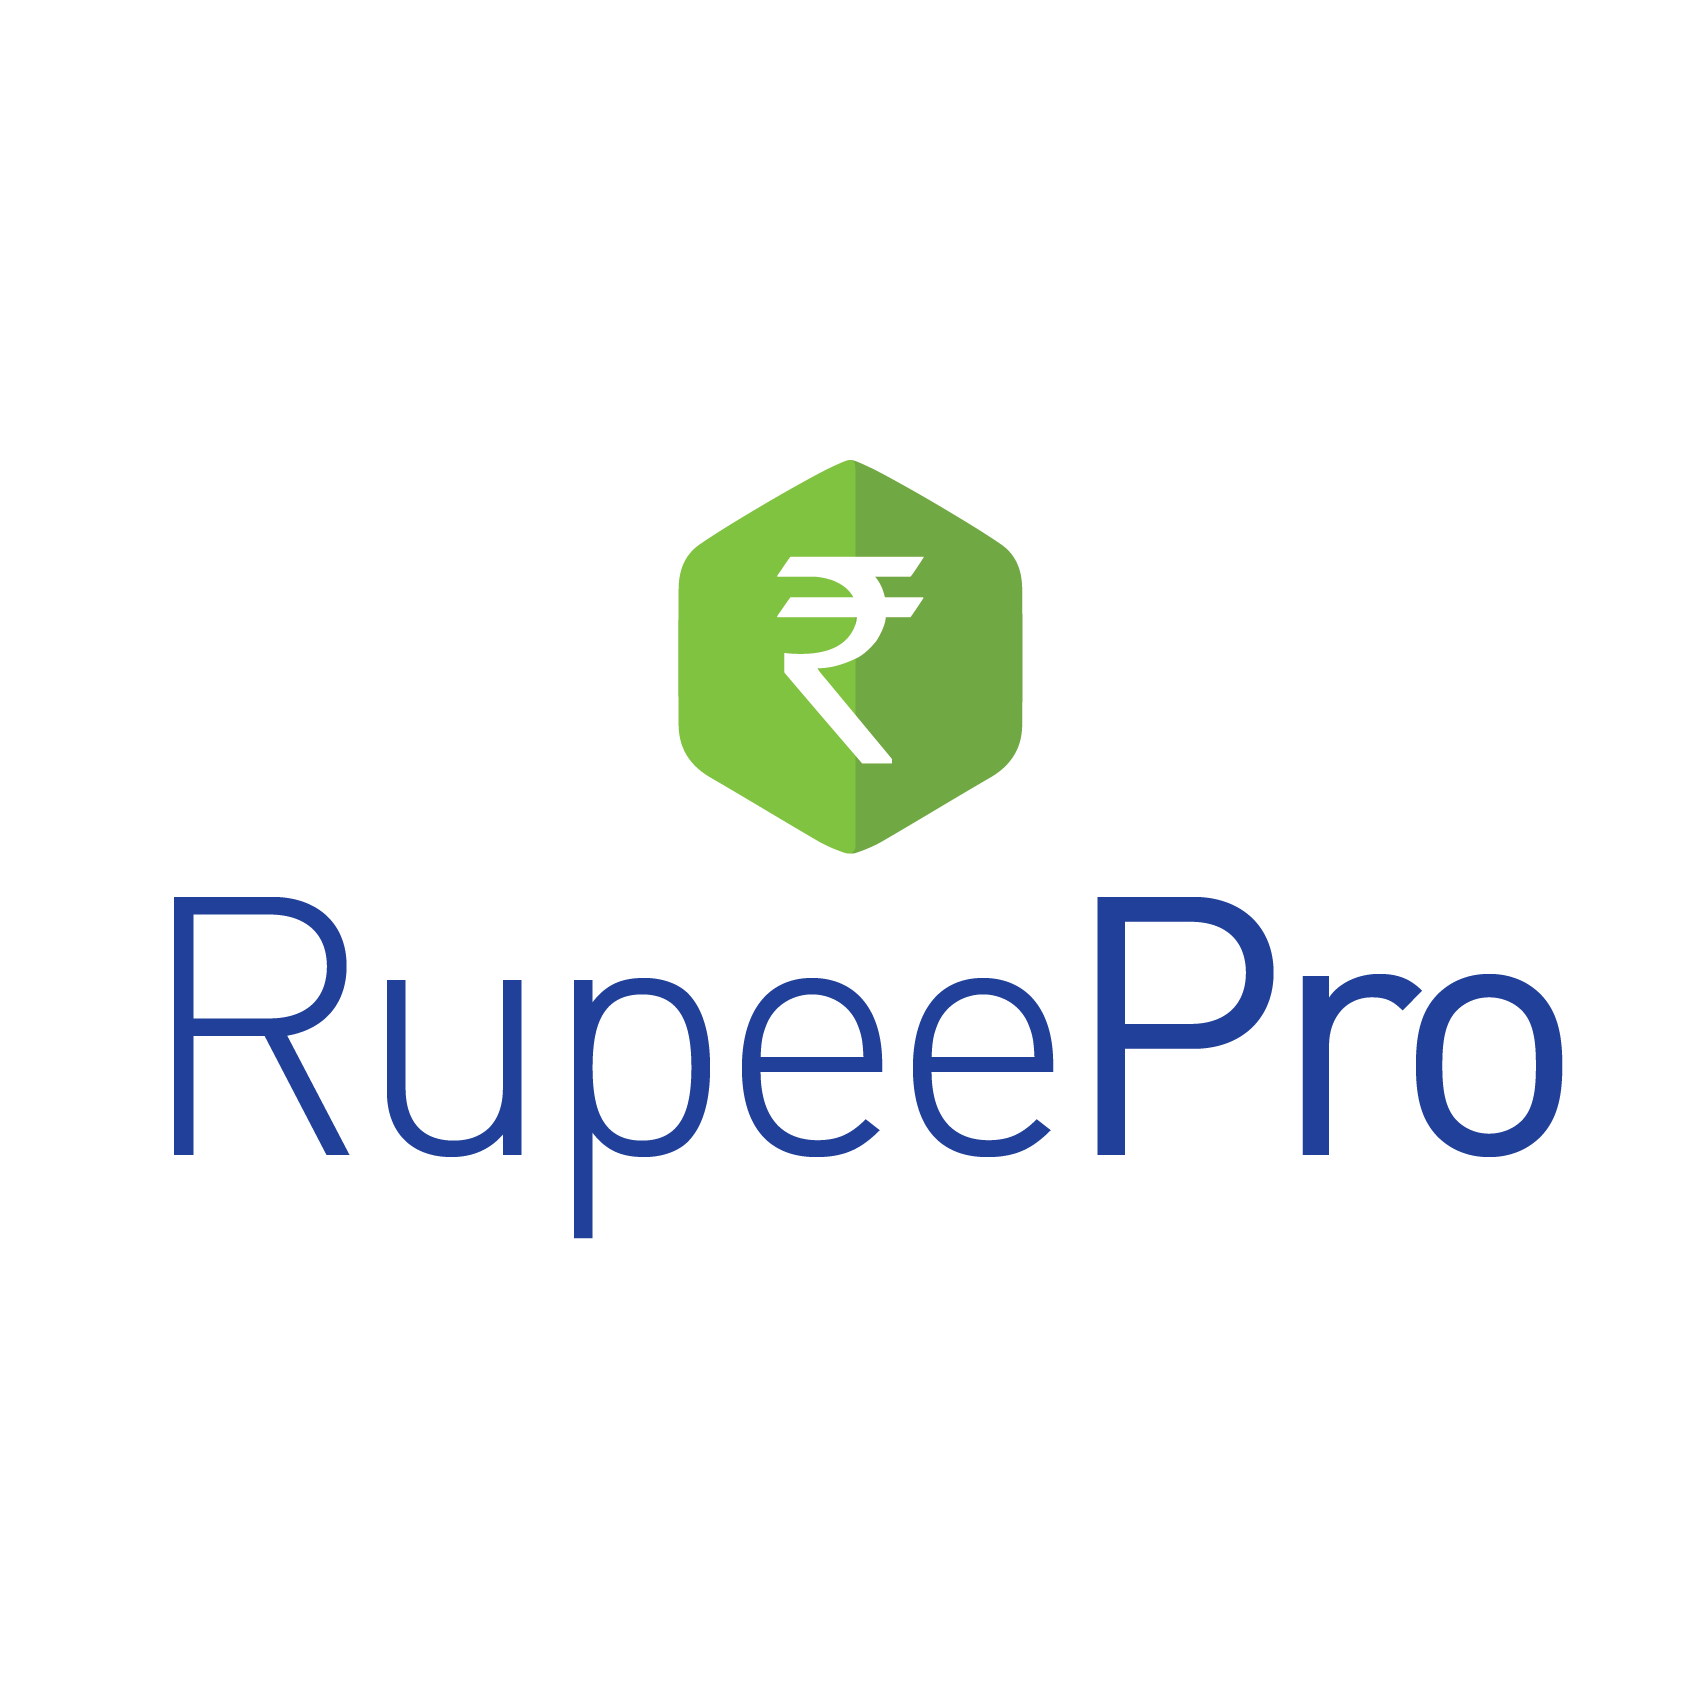 RupeePro's logo